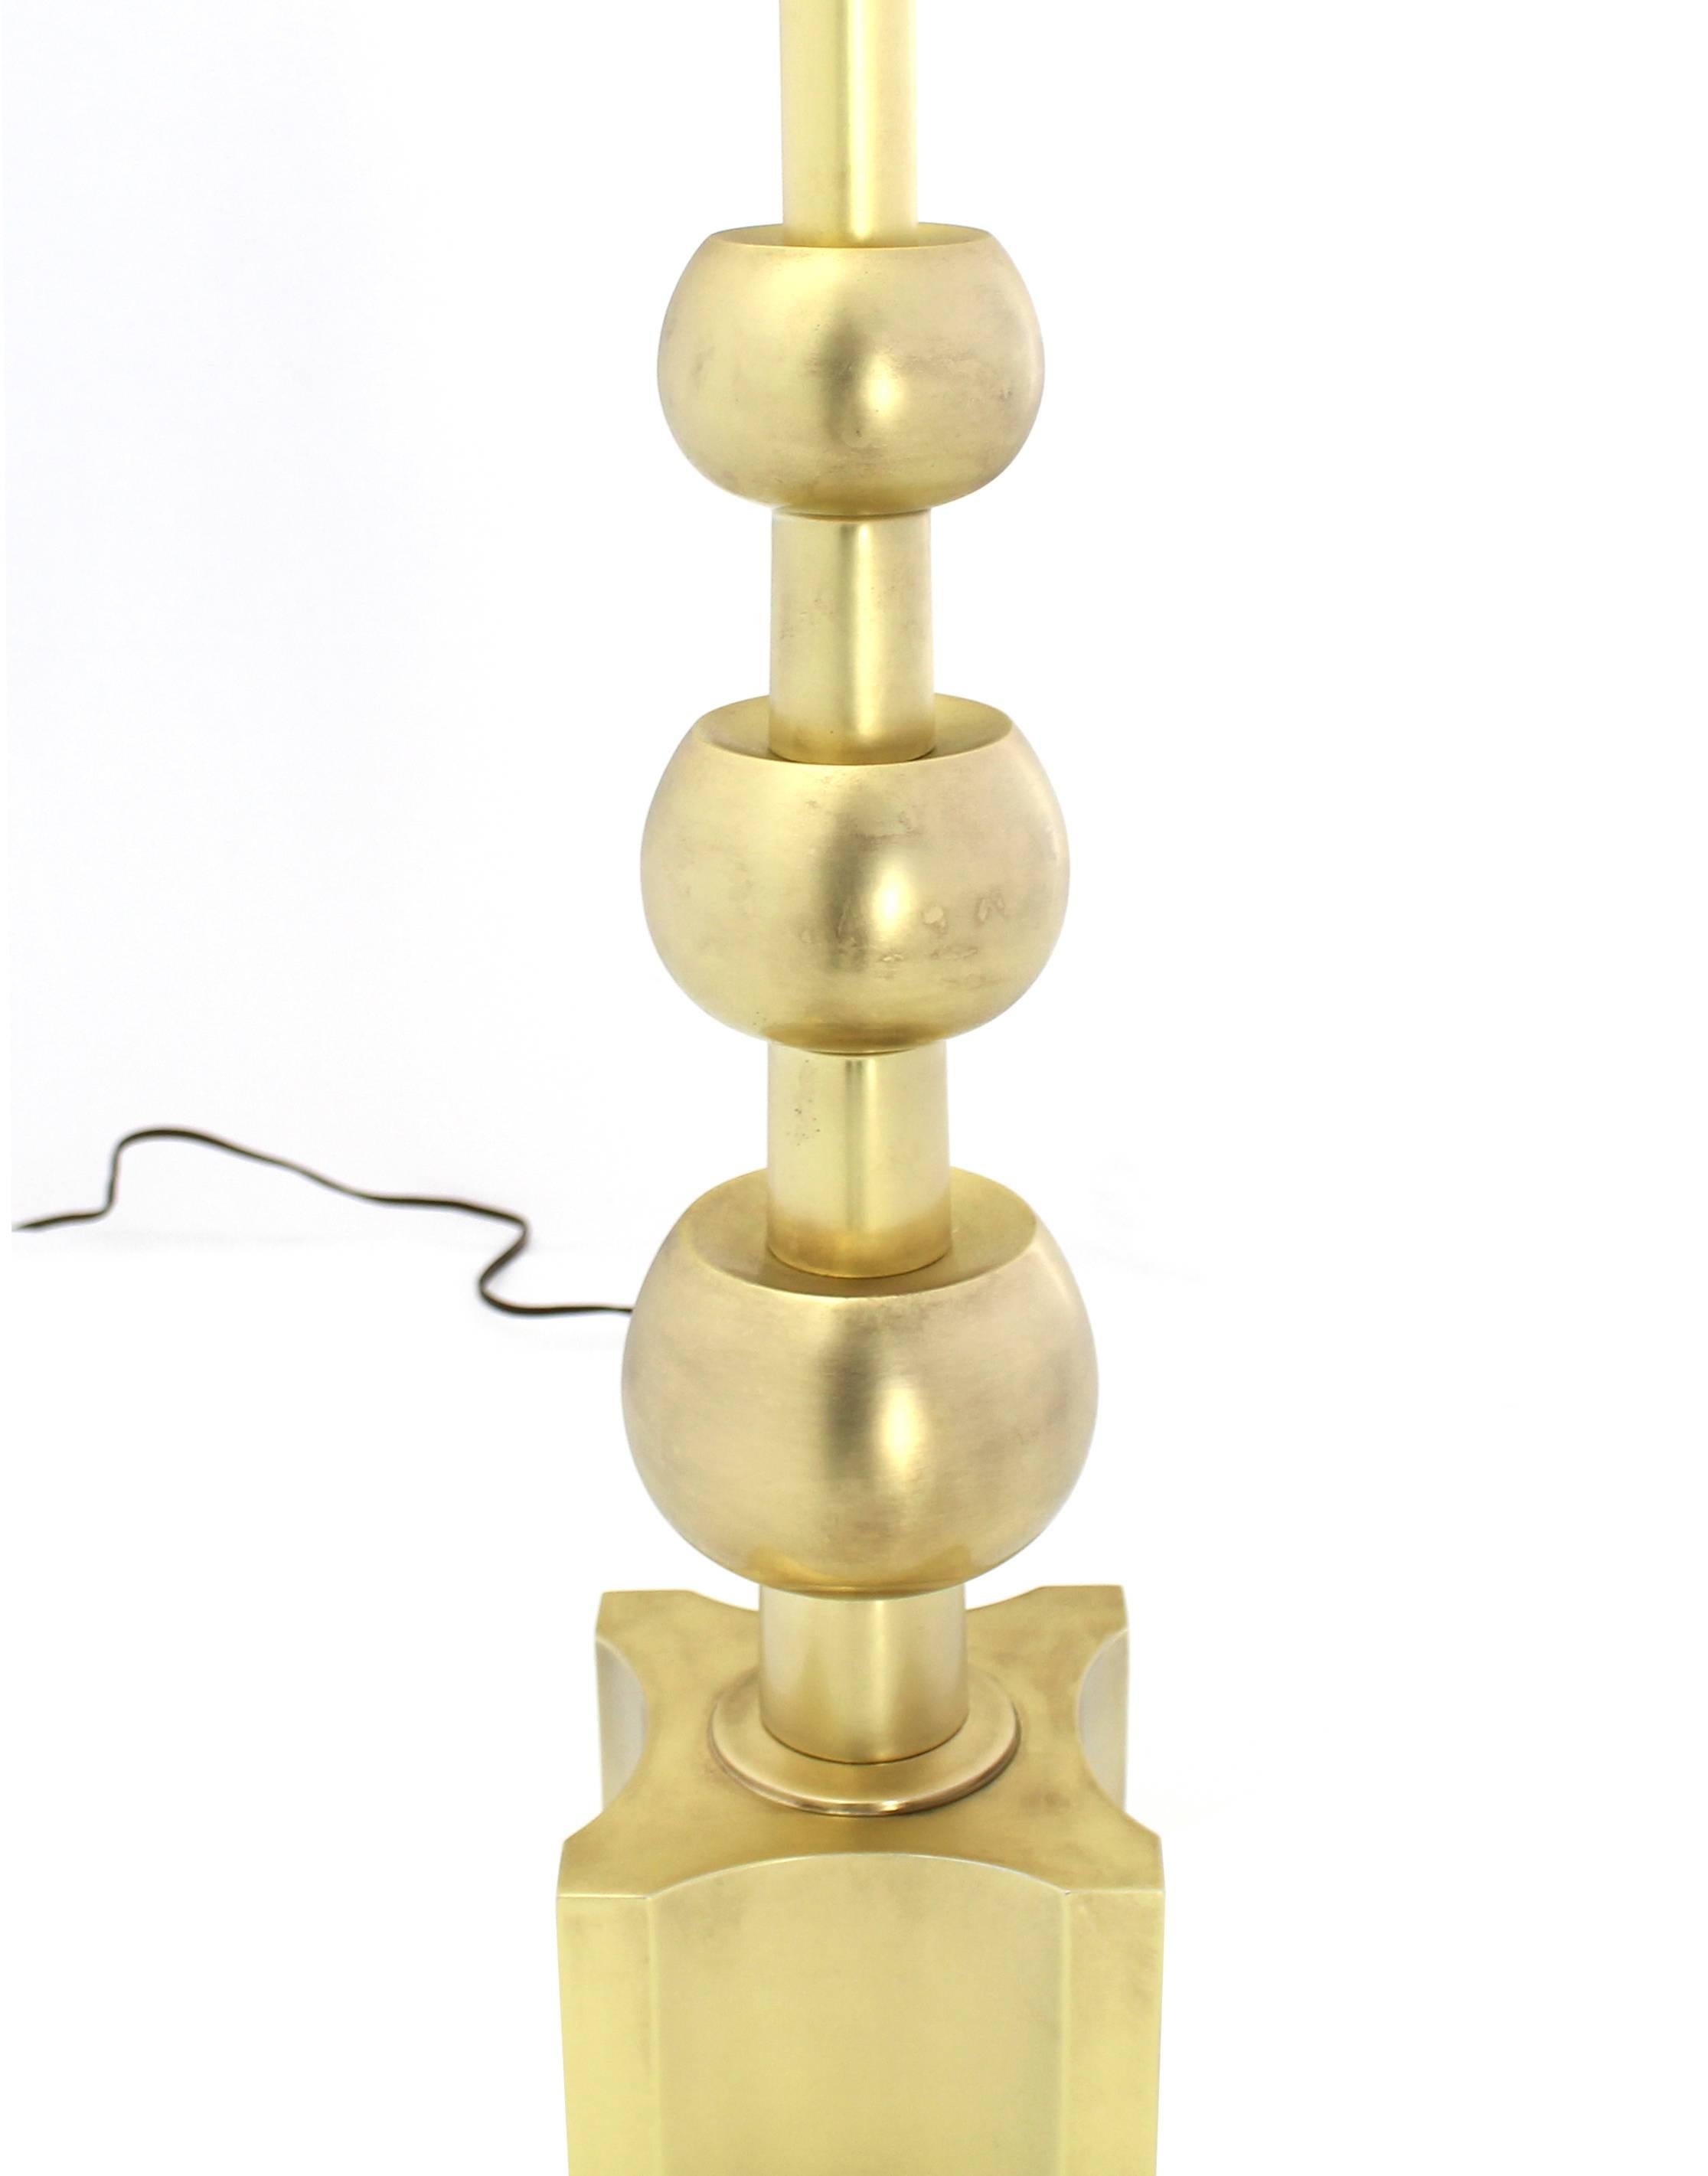 20th Century Stiffel Brass Table Lamp Mid Century Modern Stacked Orbits Jacks Base Pattern For Sale